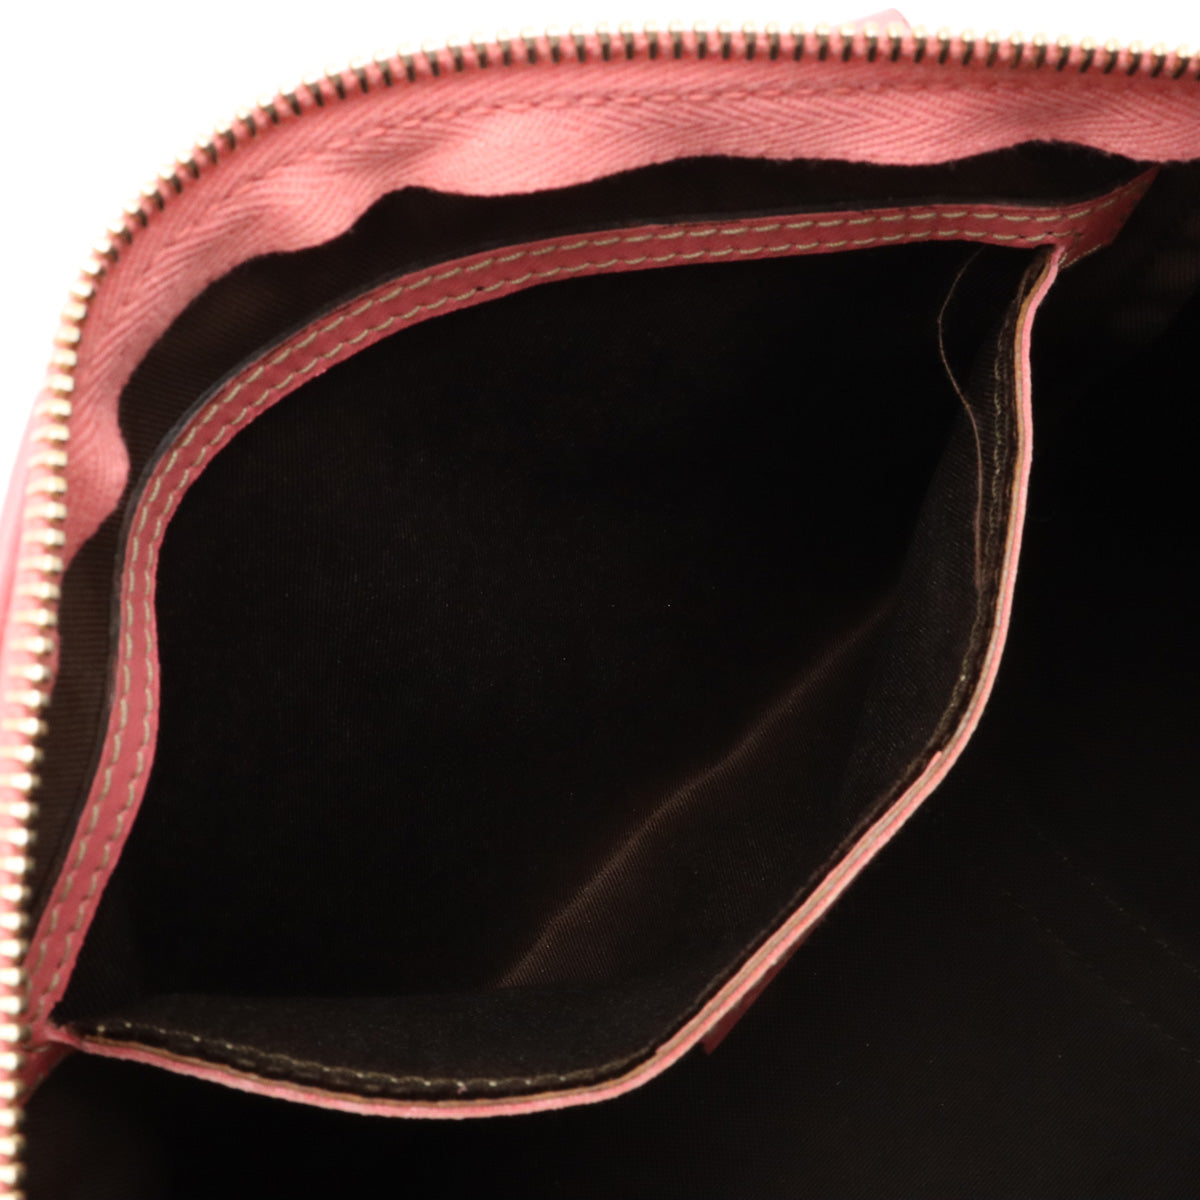 GUCCI Gucci GG Spring Handbags Mini Boston Bag PVC Leather Grey Pink Gold  193603 Blumin